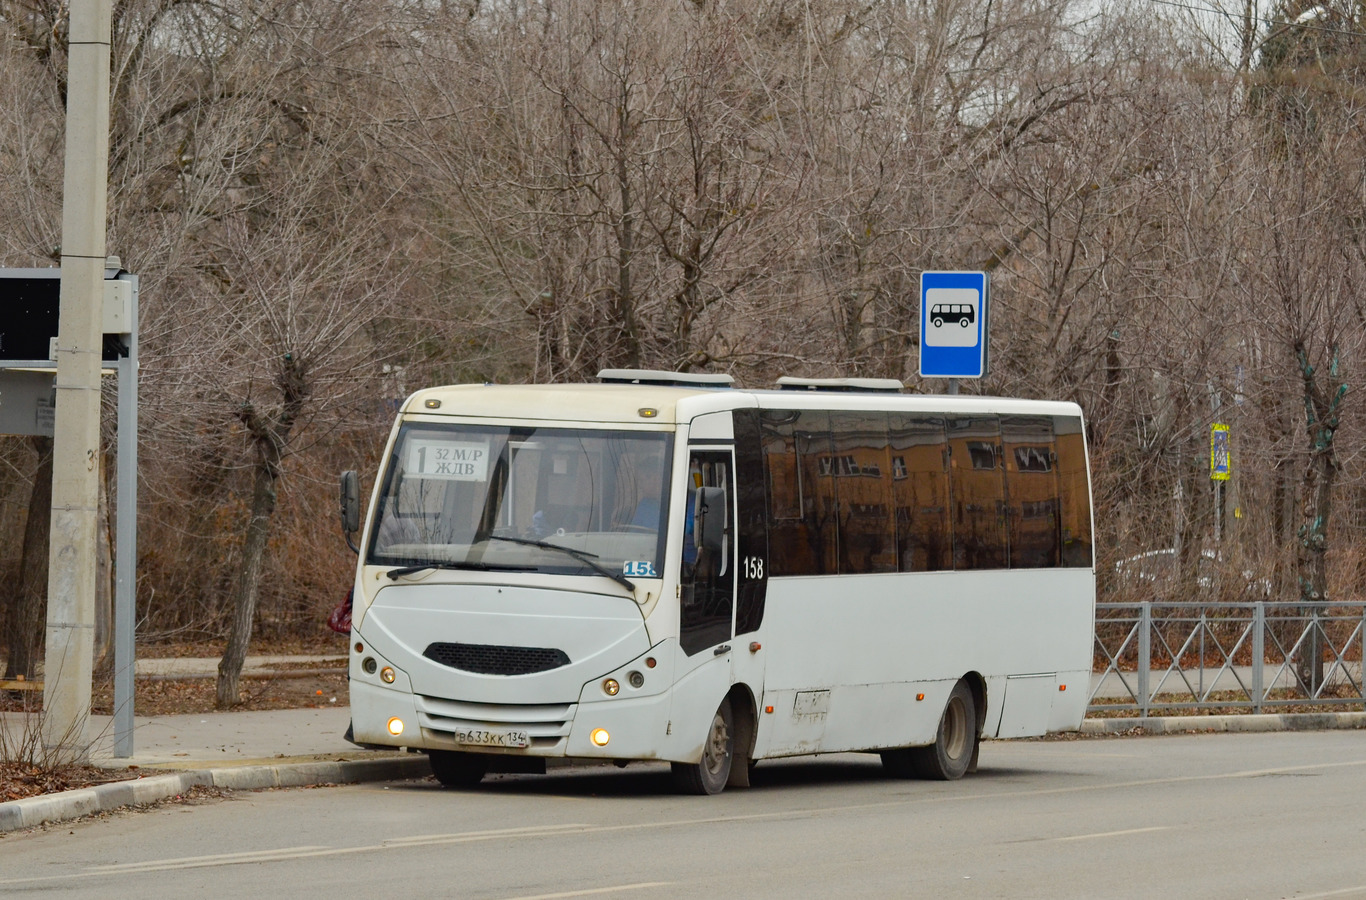 Volgogradská oblast, Volgabus-4298.G8 č. 158